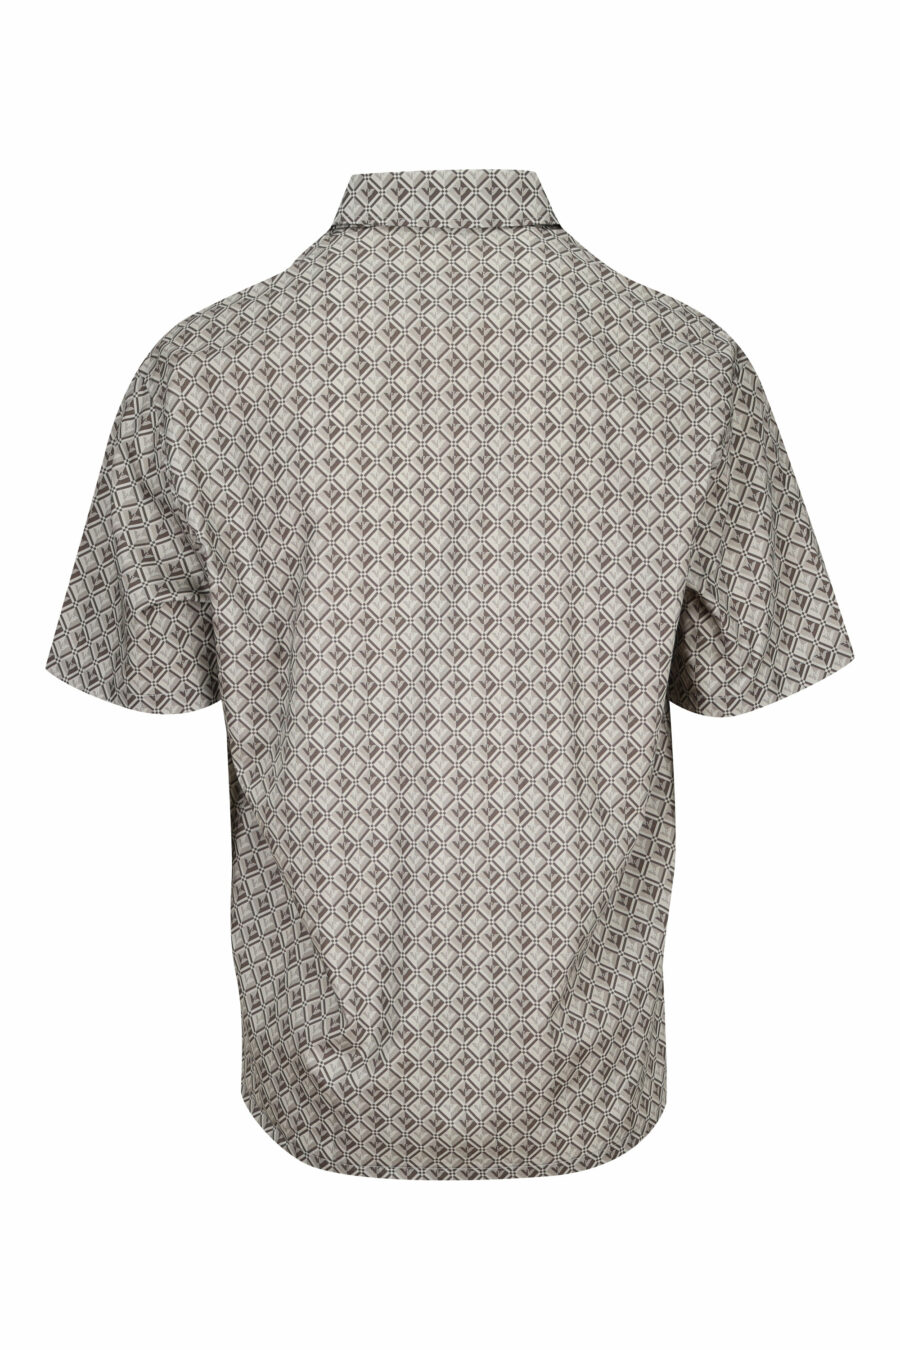 Camisa gris de rombos manga corta con minilogo - 8057970851387 1